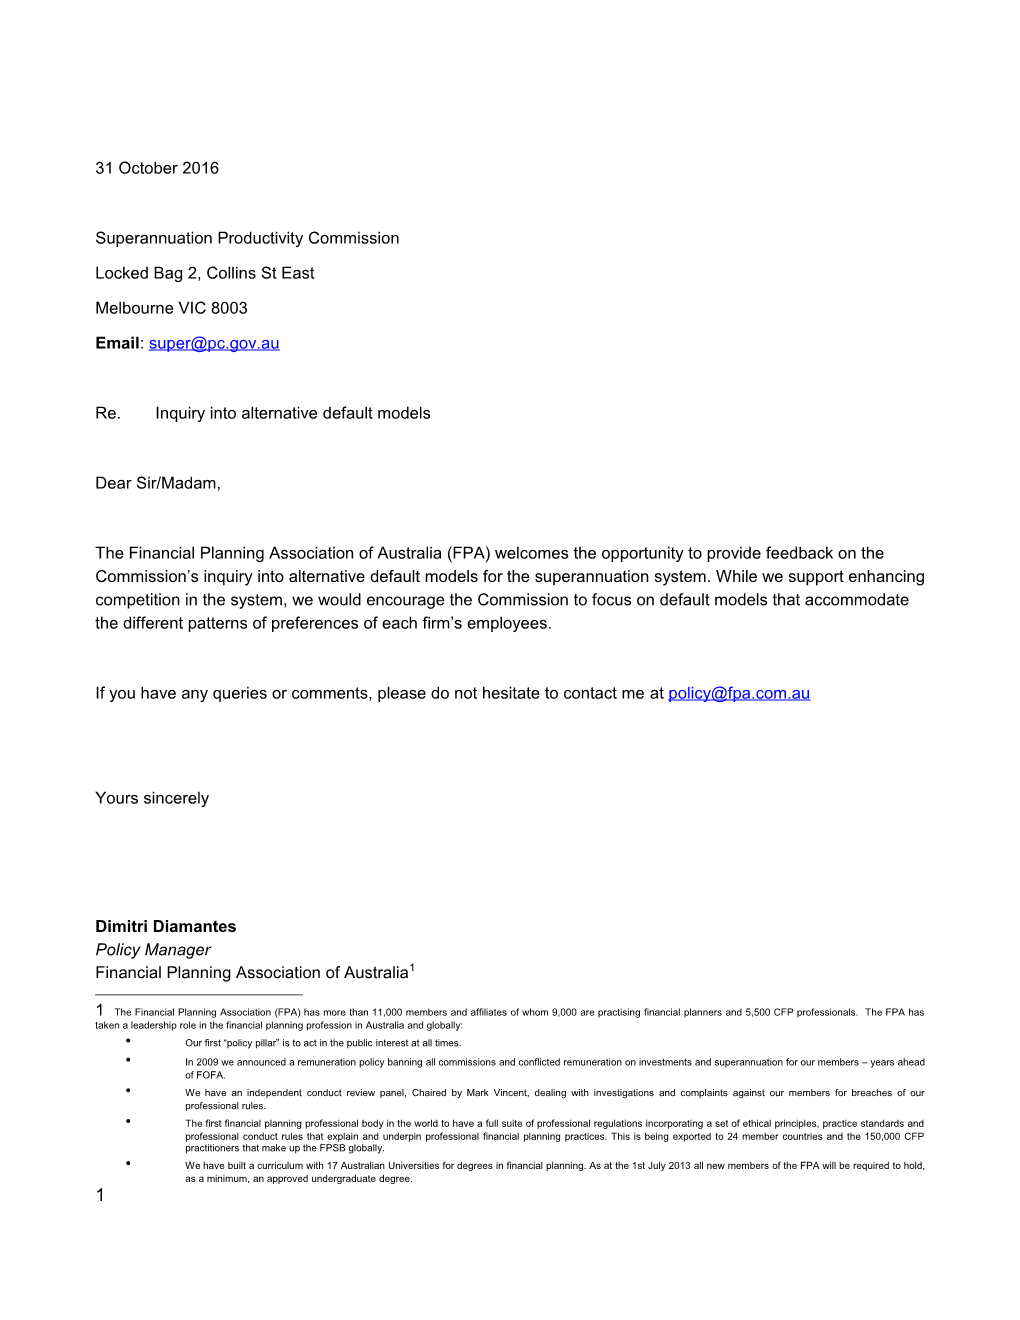 Submission 29 - Financial Planning Association of Australia (FPA) - Alternative Default